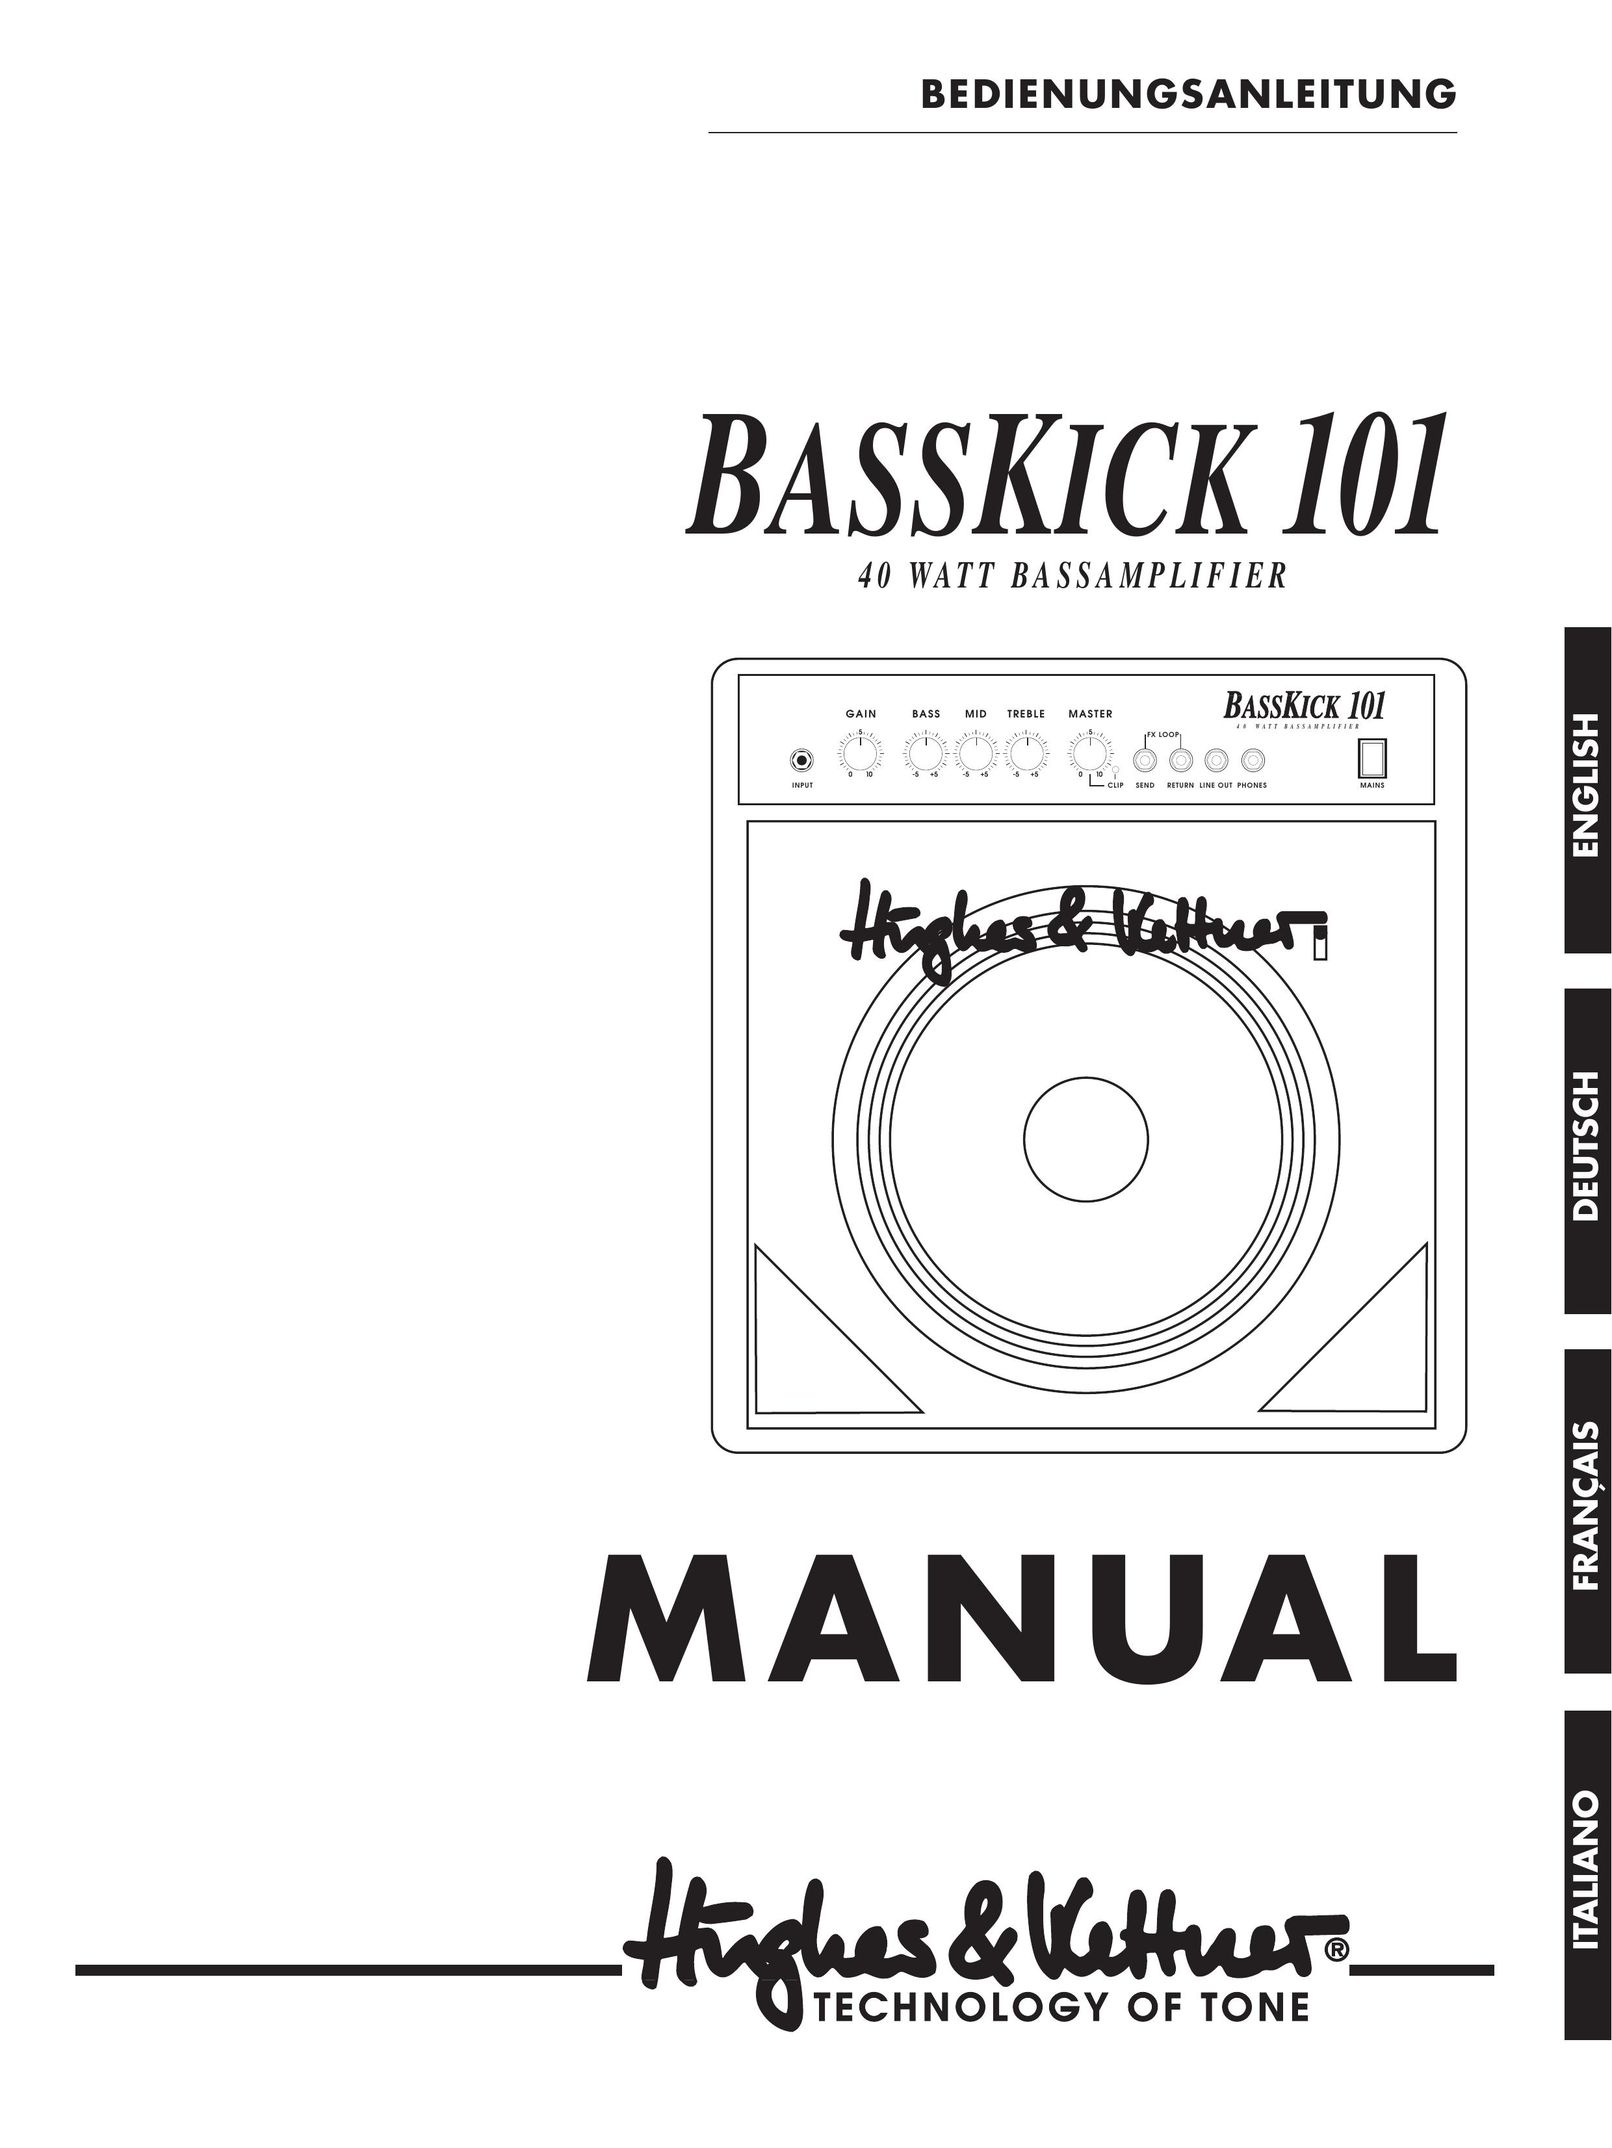 Hughes & Kettner Bass Kick 101 Stereo Amplifier User Manual